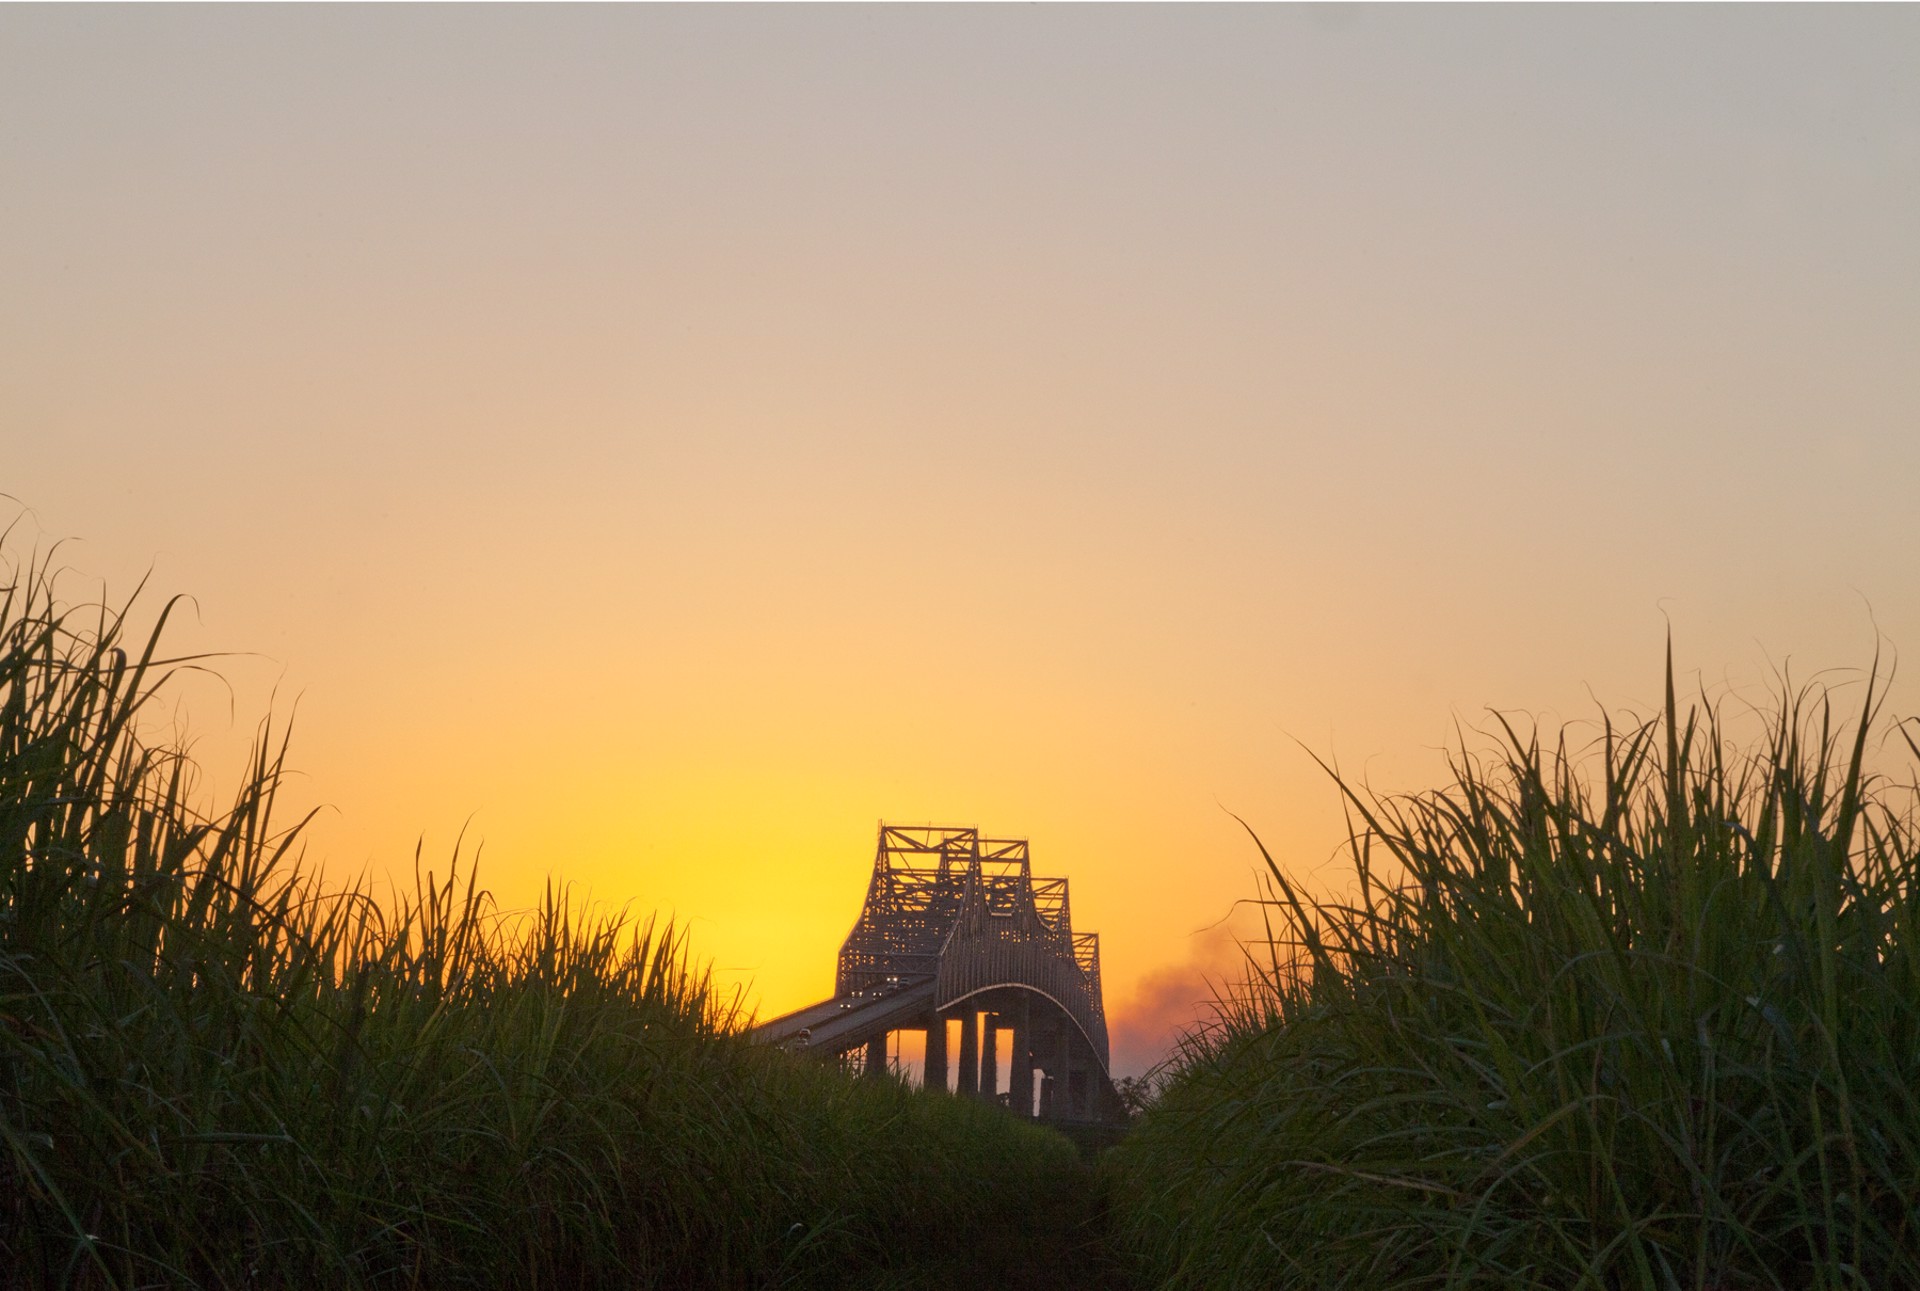 Sunrise Bridge after Sundown by Philip Gould